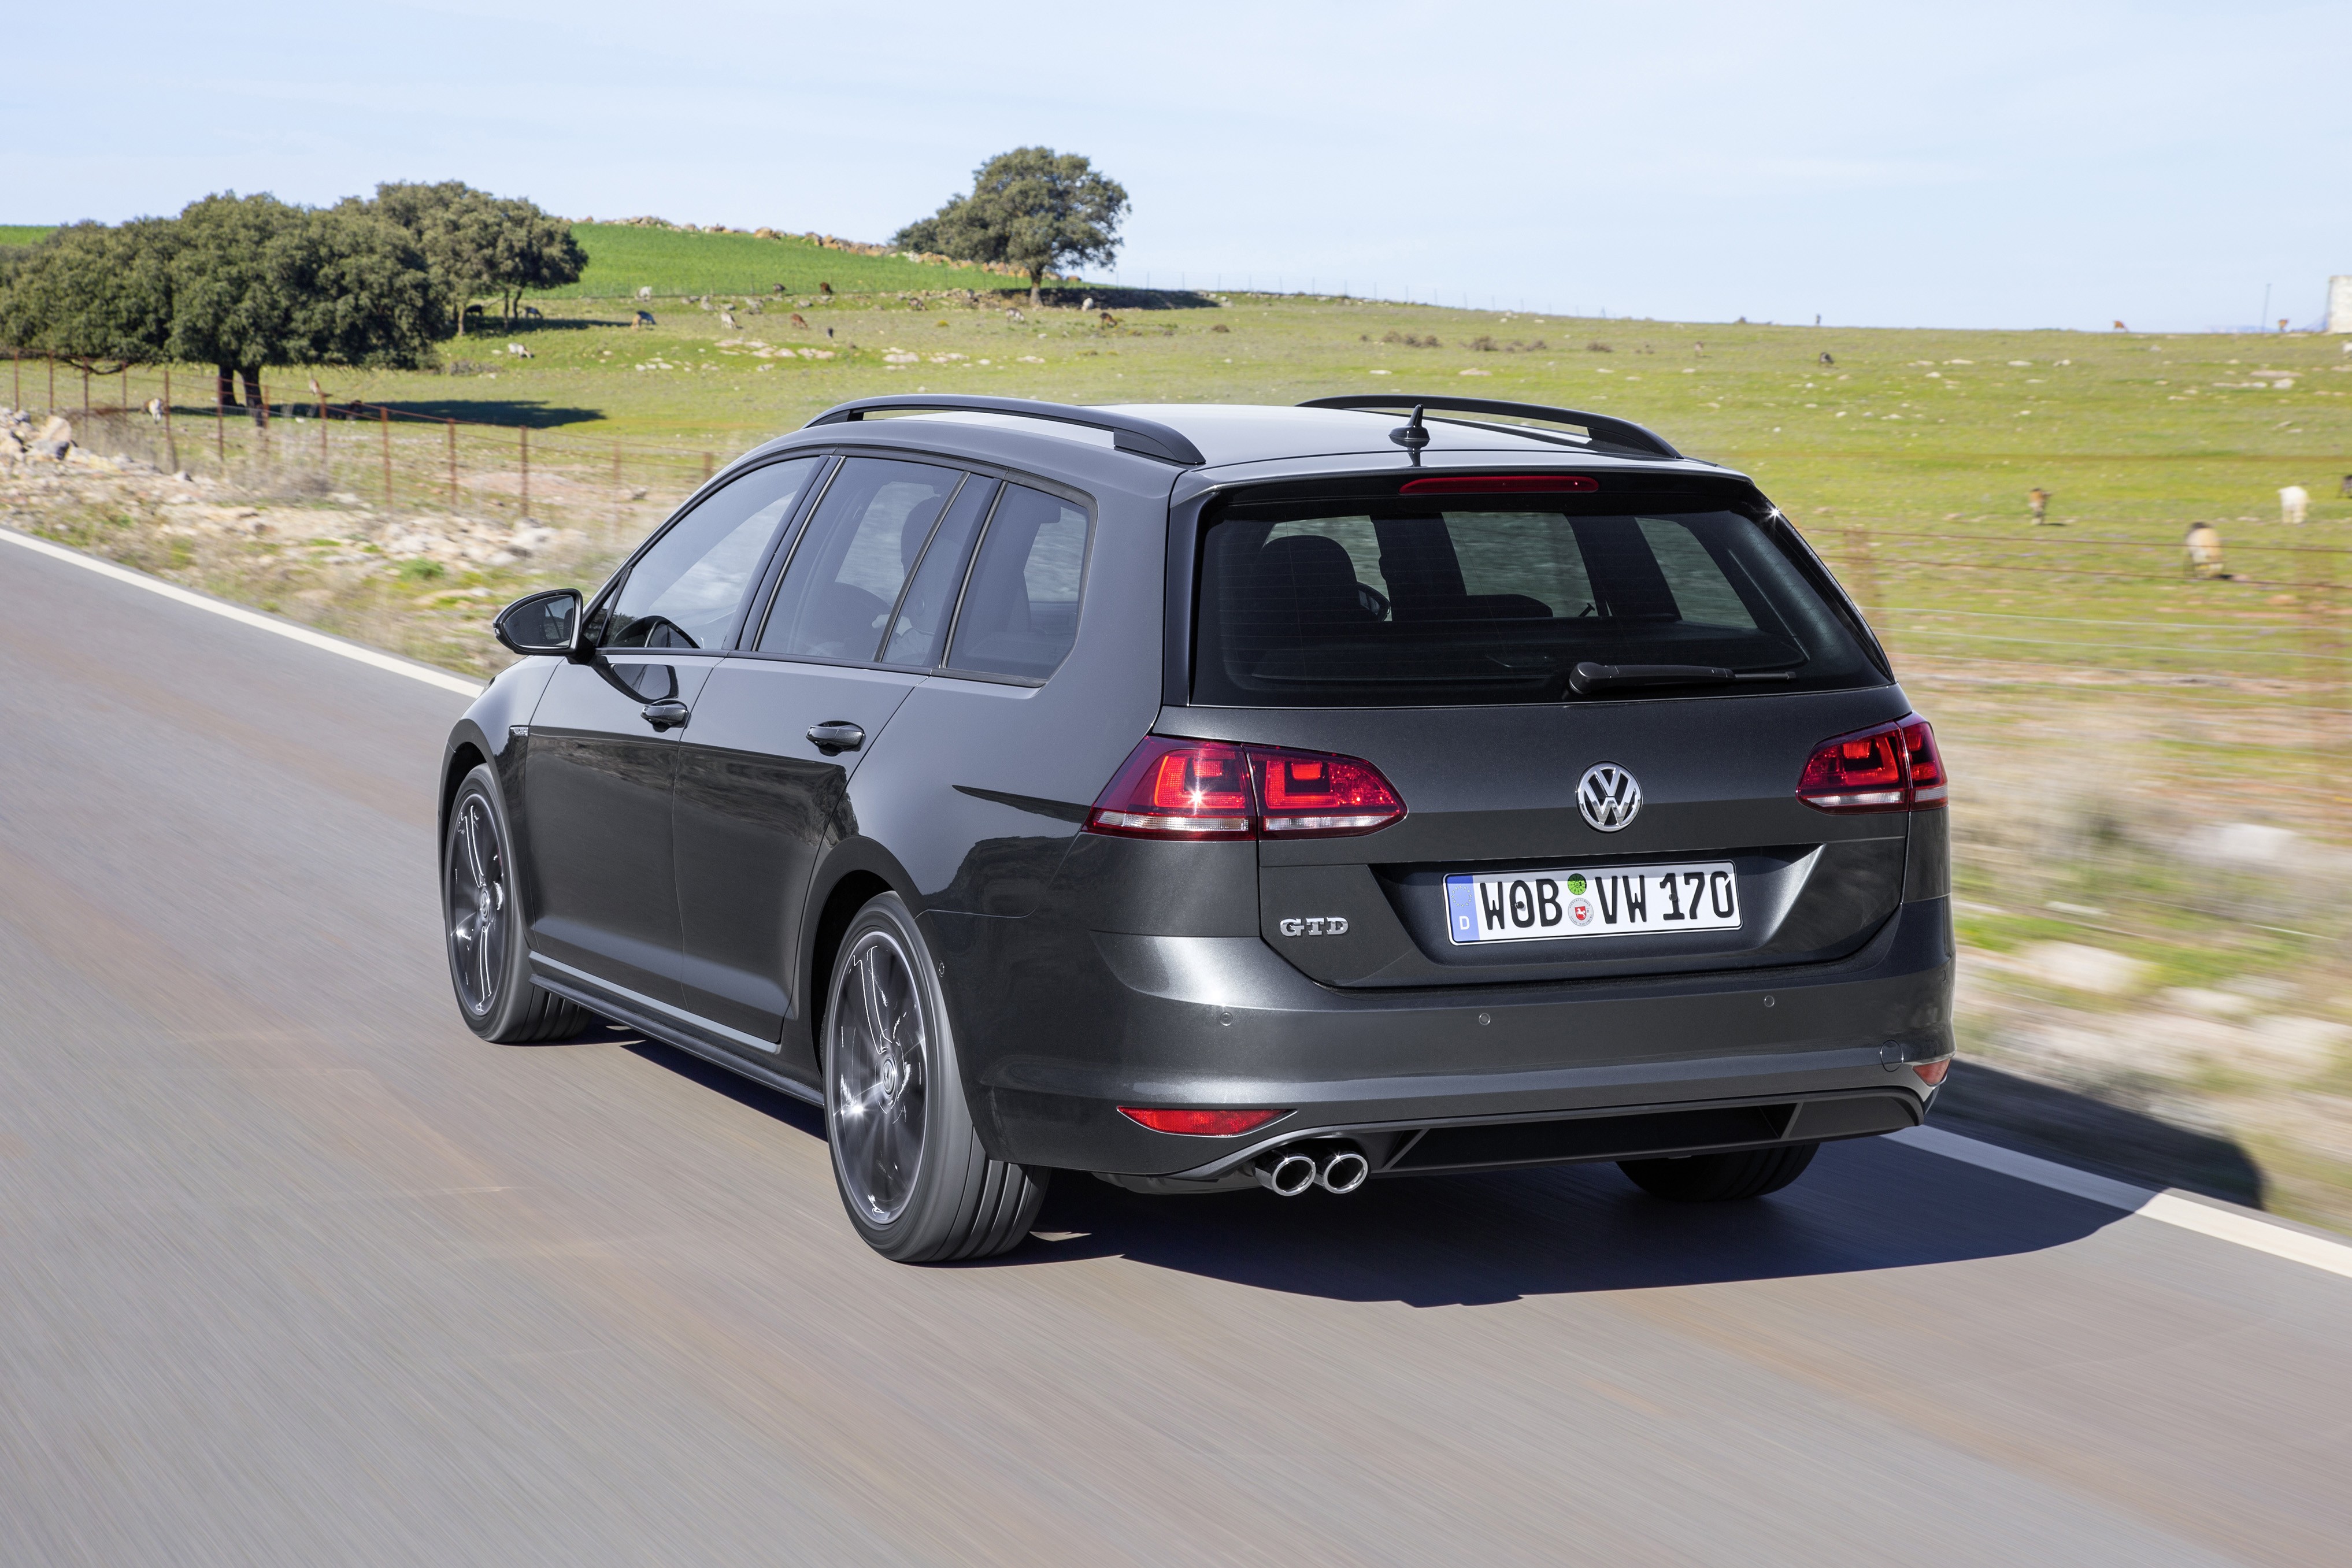 Volkswagen Golf Variant mod specifications